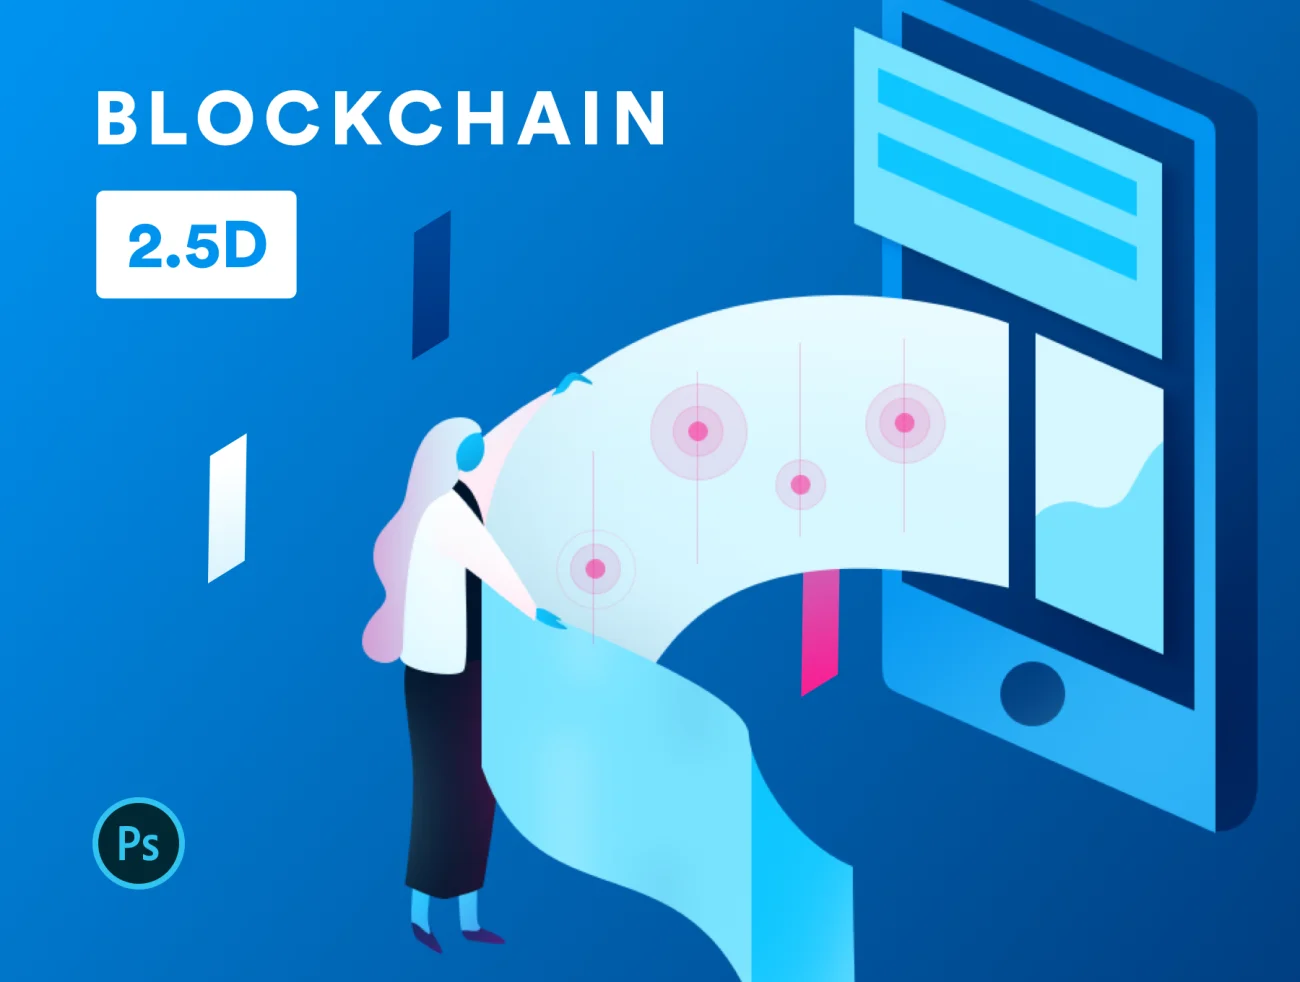 Blockchain 2.5D Illustrations 区块链2.5D插图-人物插画、商业金融、场景插画、插画、插画功能、插画风格、数据演示、概念创意、线条手绘、职场办公、虚拟货币、趣味漫画、金融理财-到位啦UI